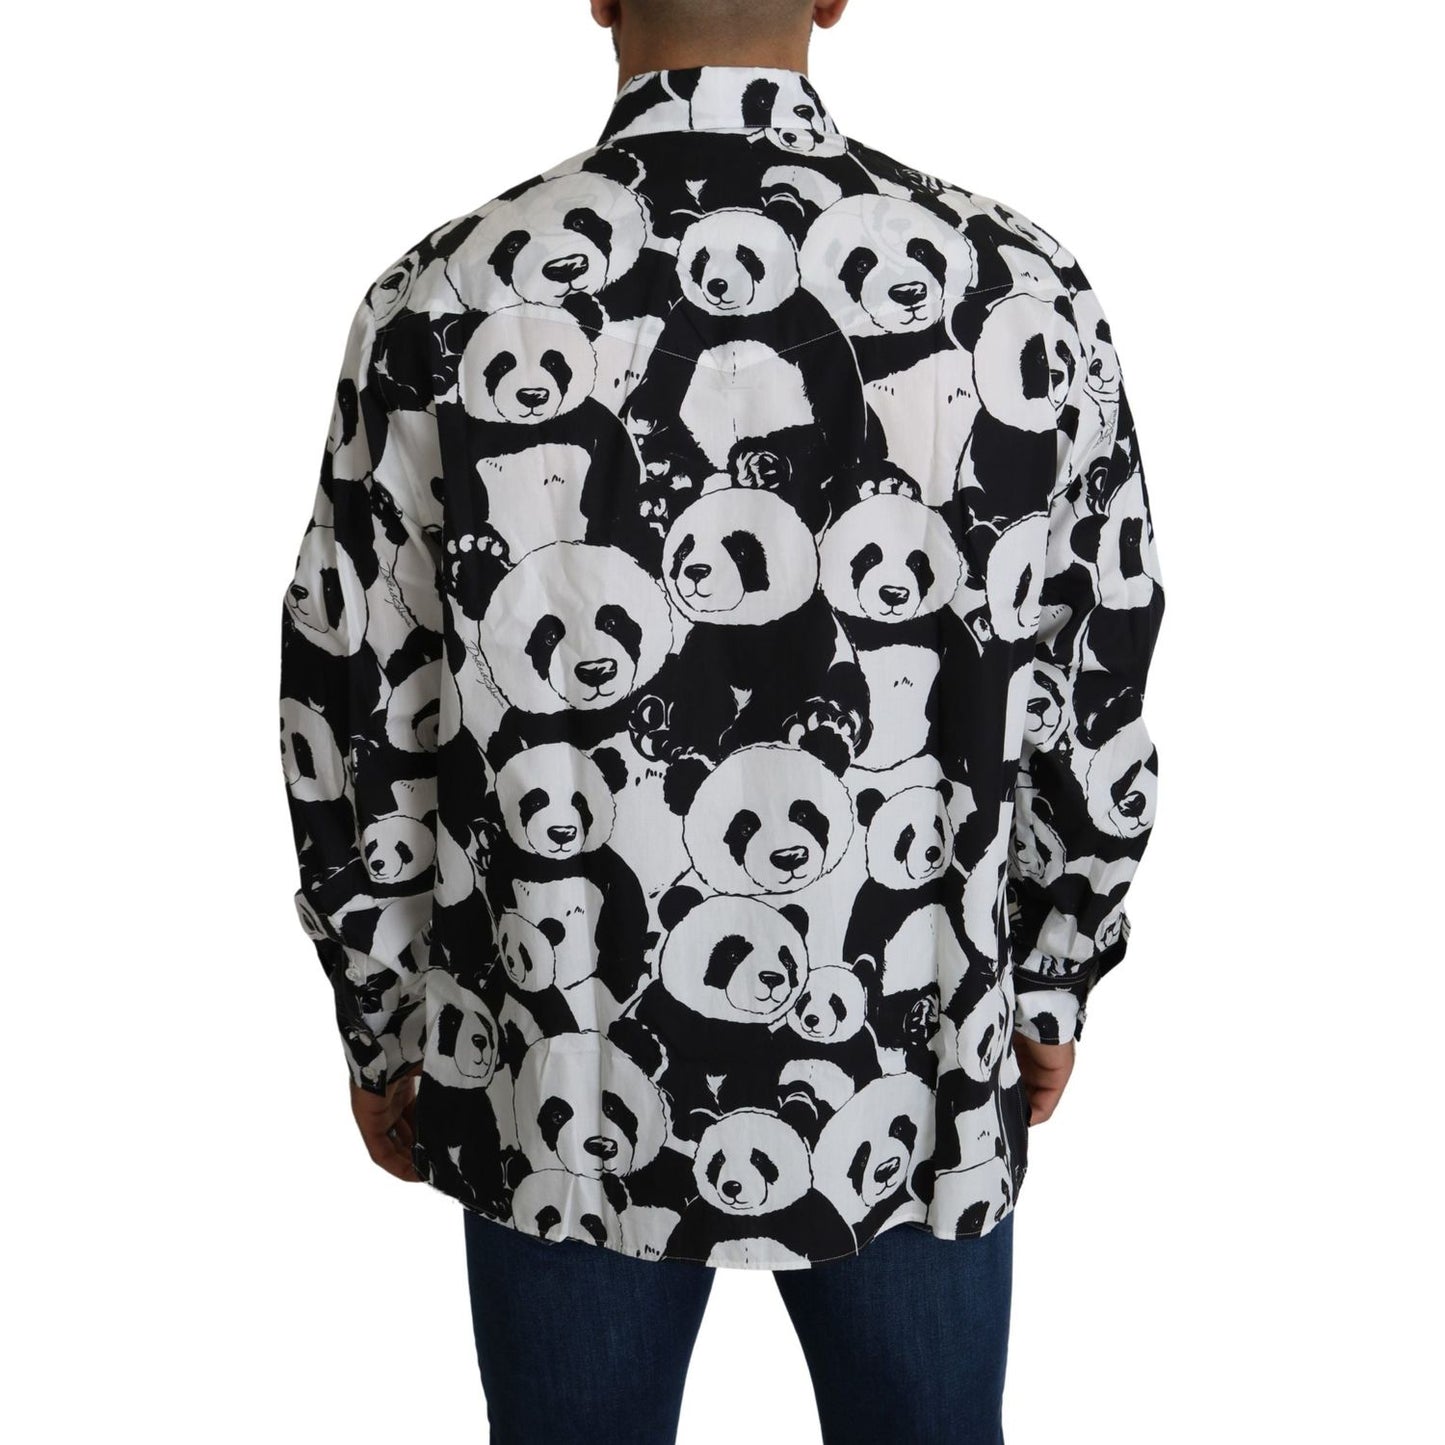 Dolce & Gabbana Panda Print Pure Cotton Shirt - Black White black-panda-mens-casual-100-cotton-shirt